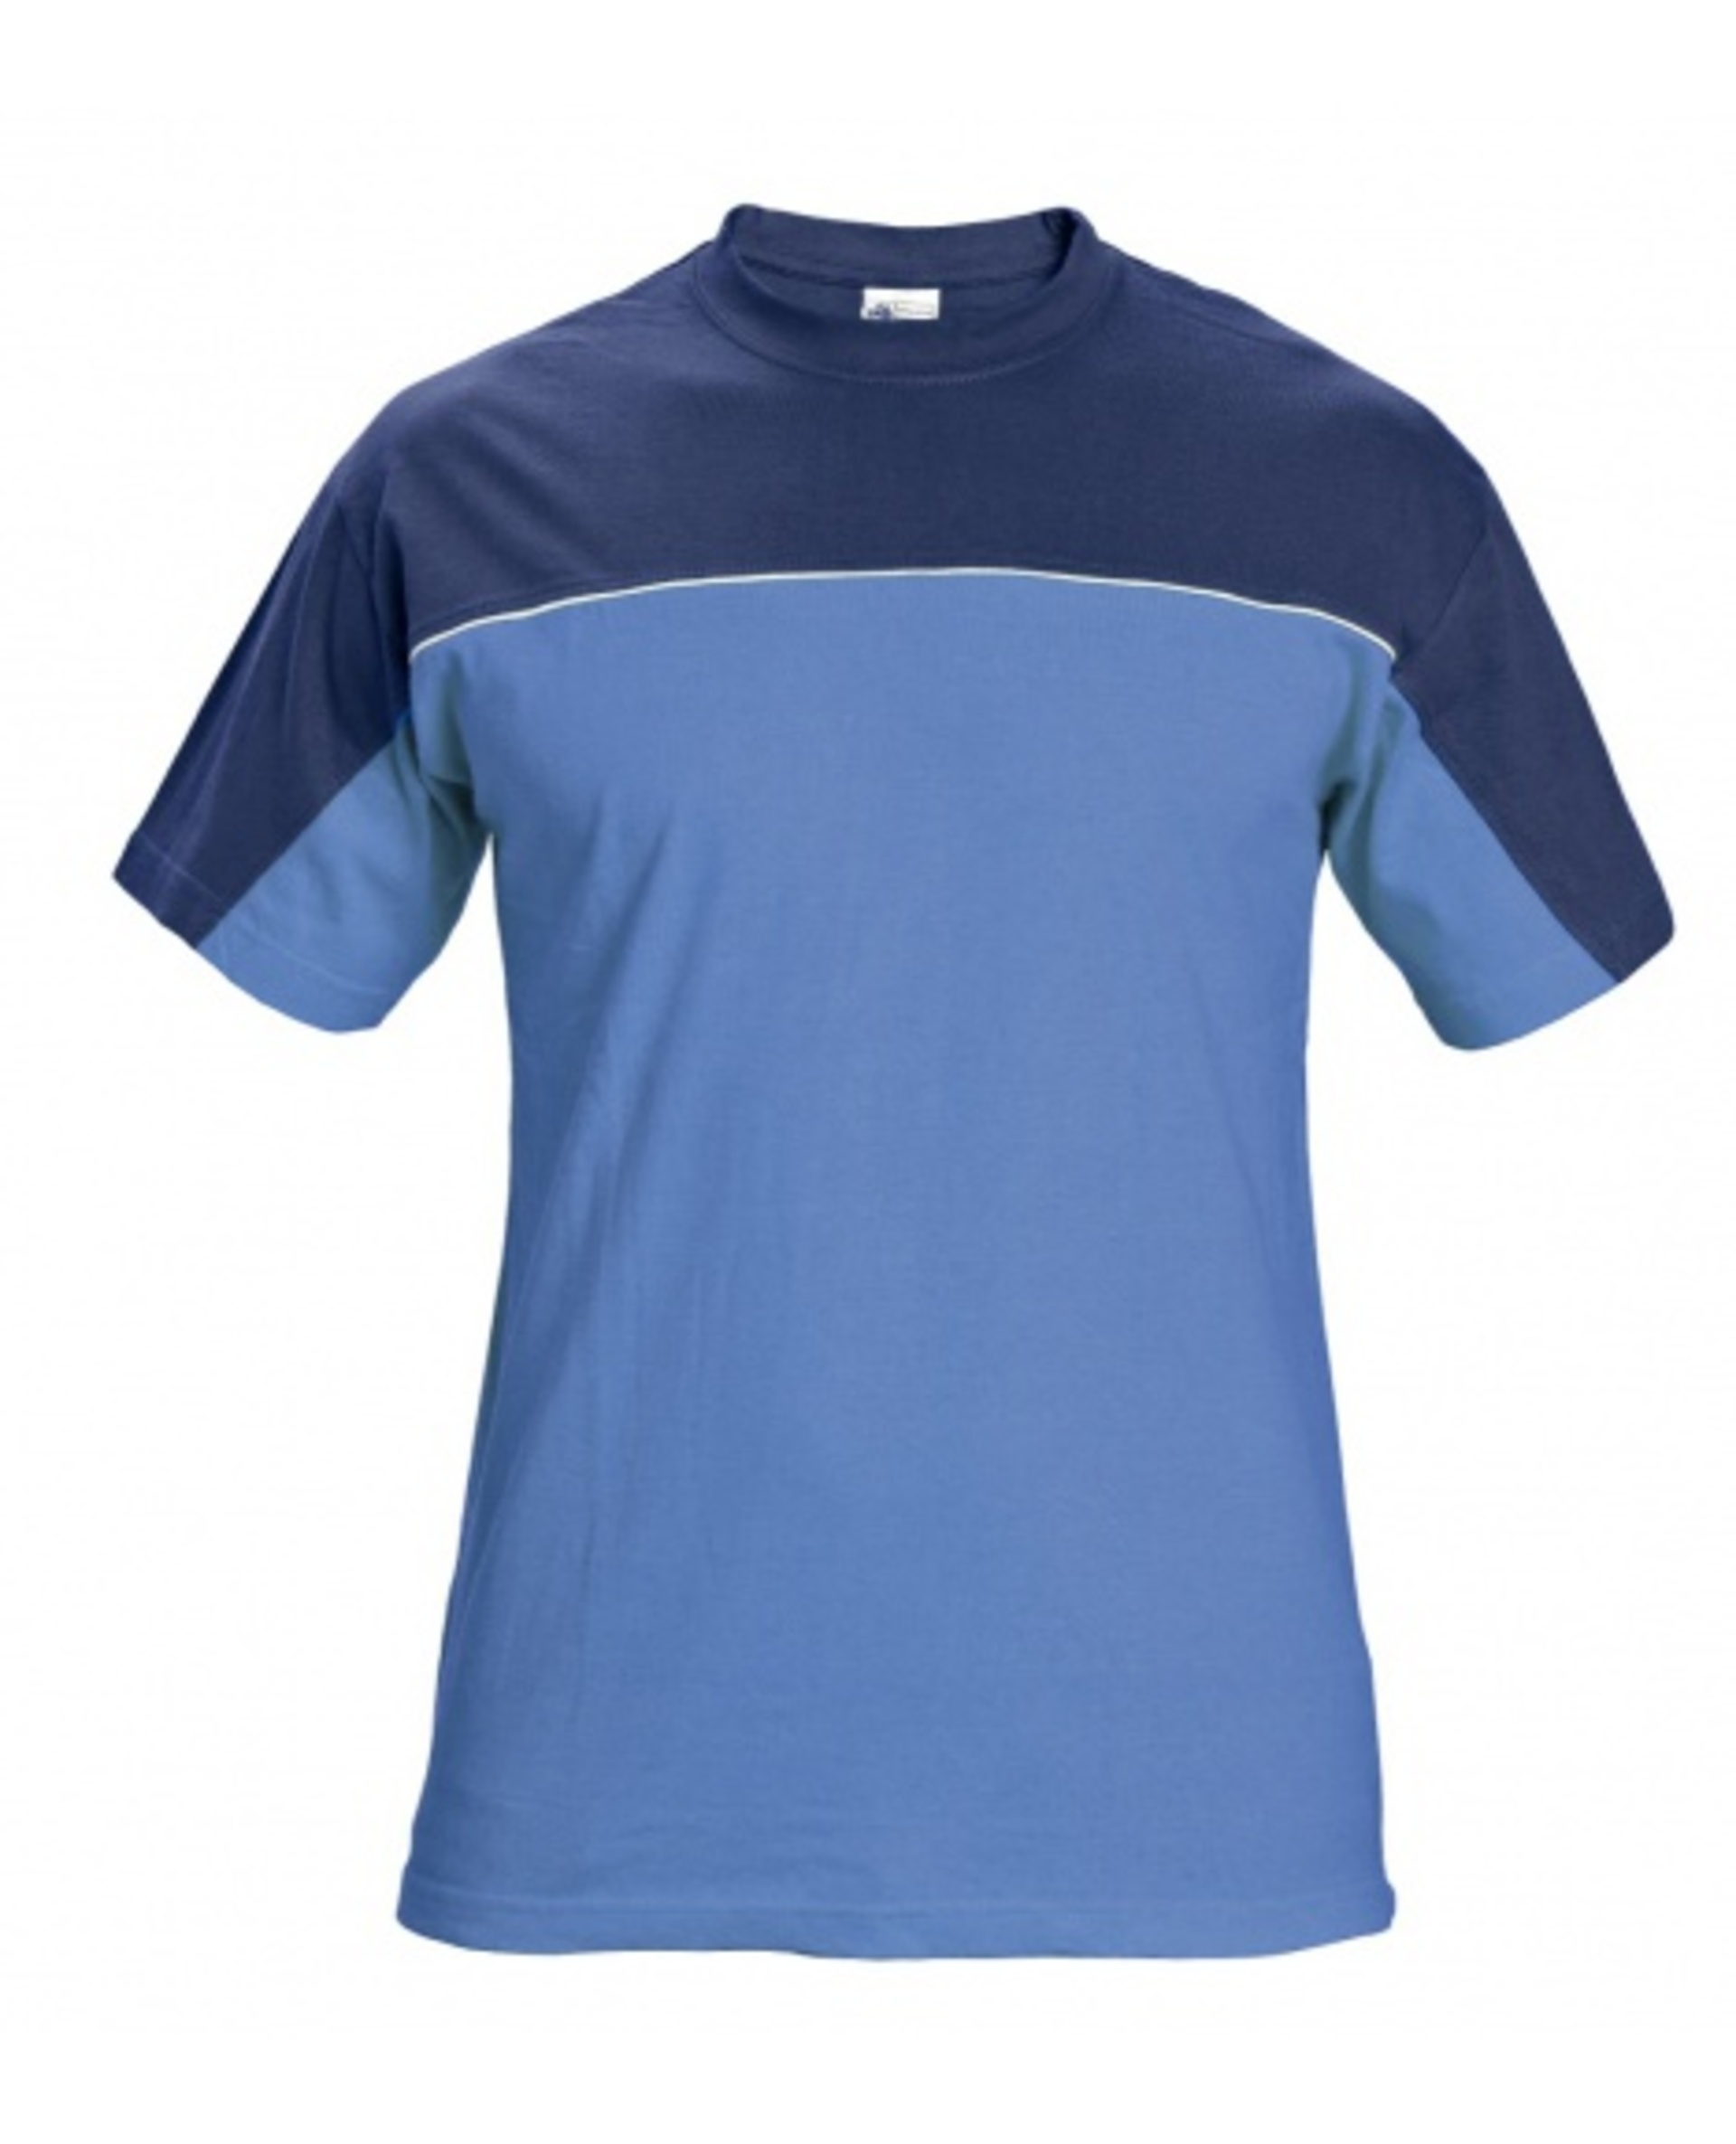 Tričko  STANMORE modrá  XL